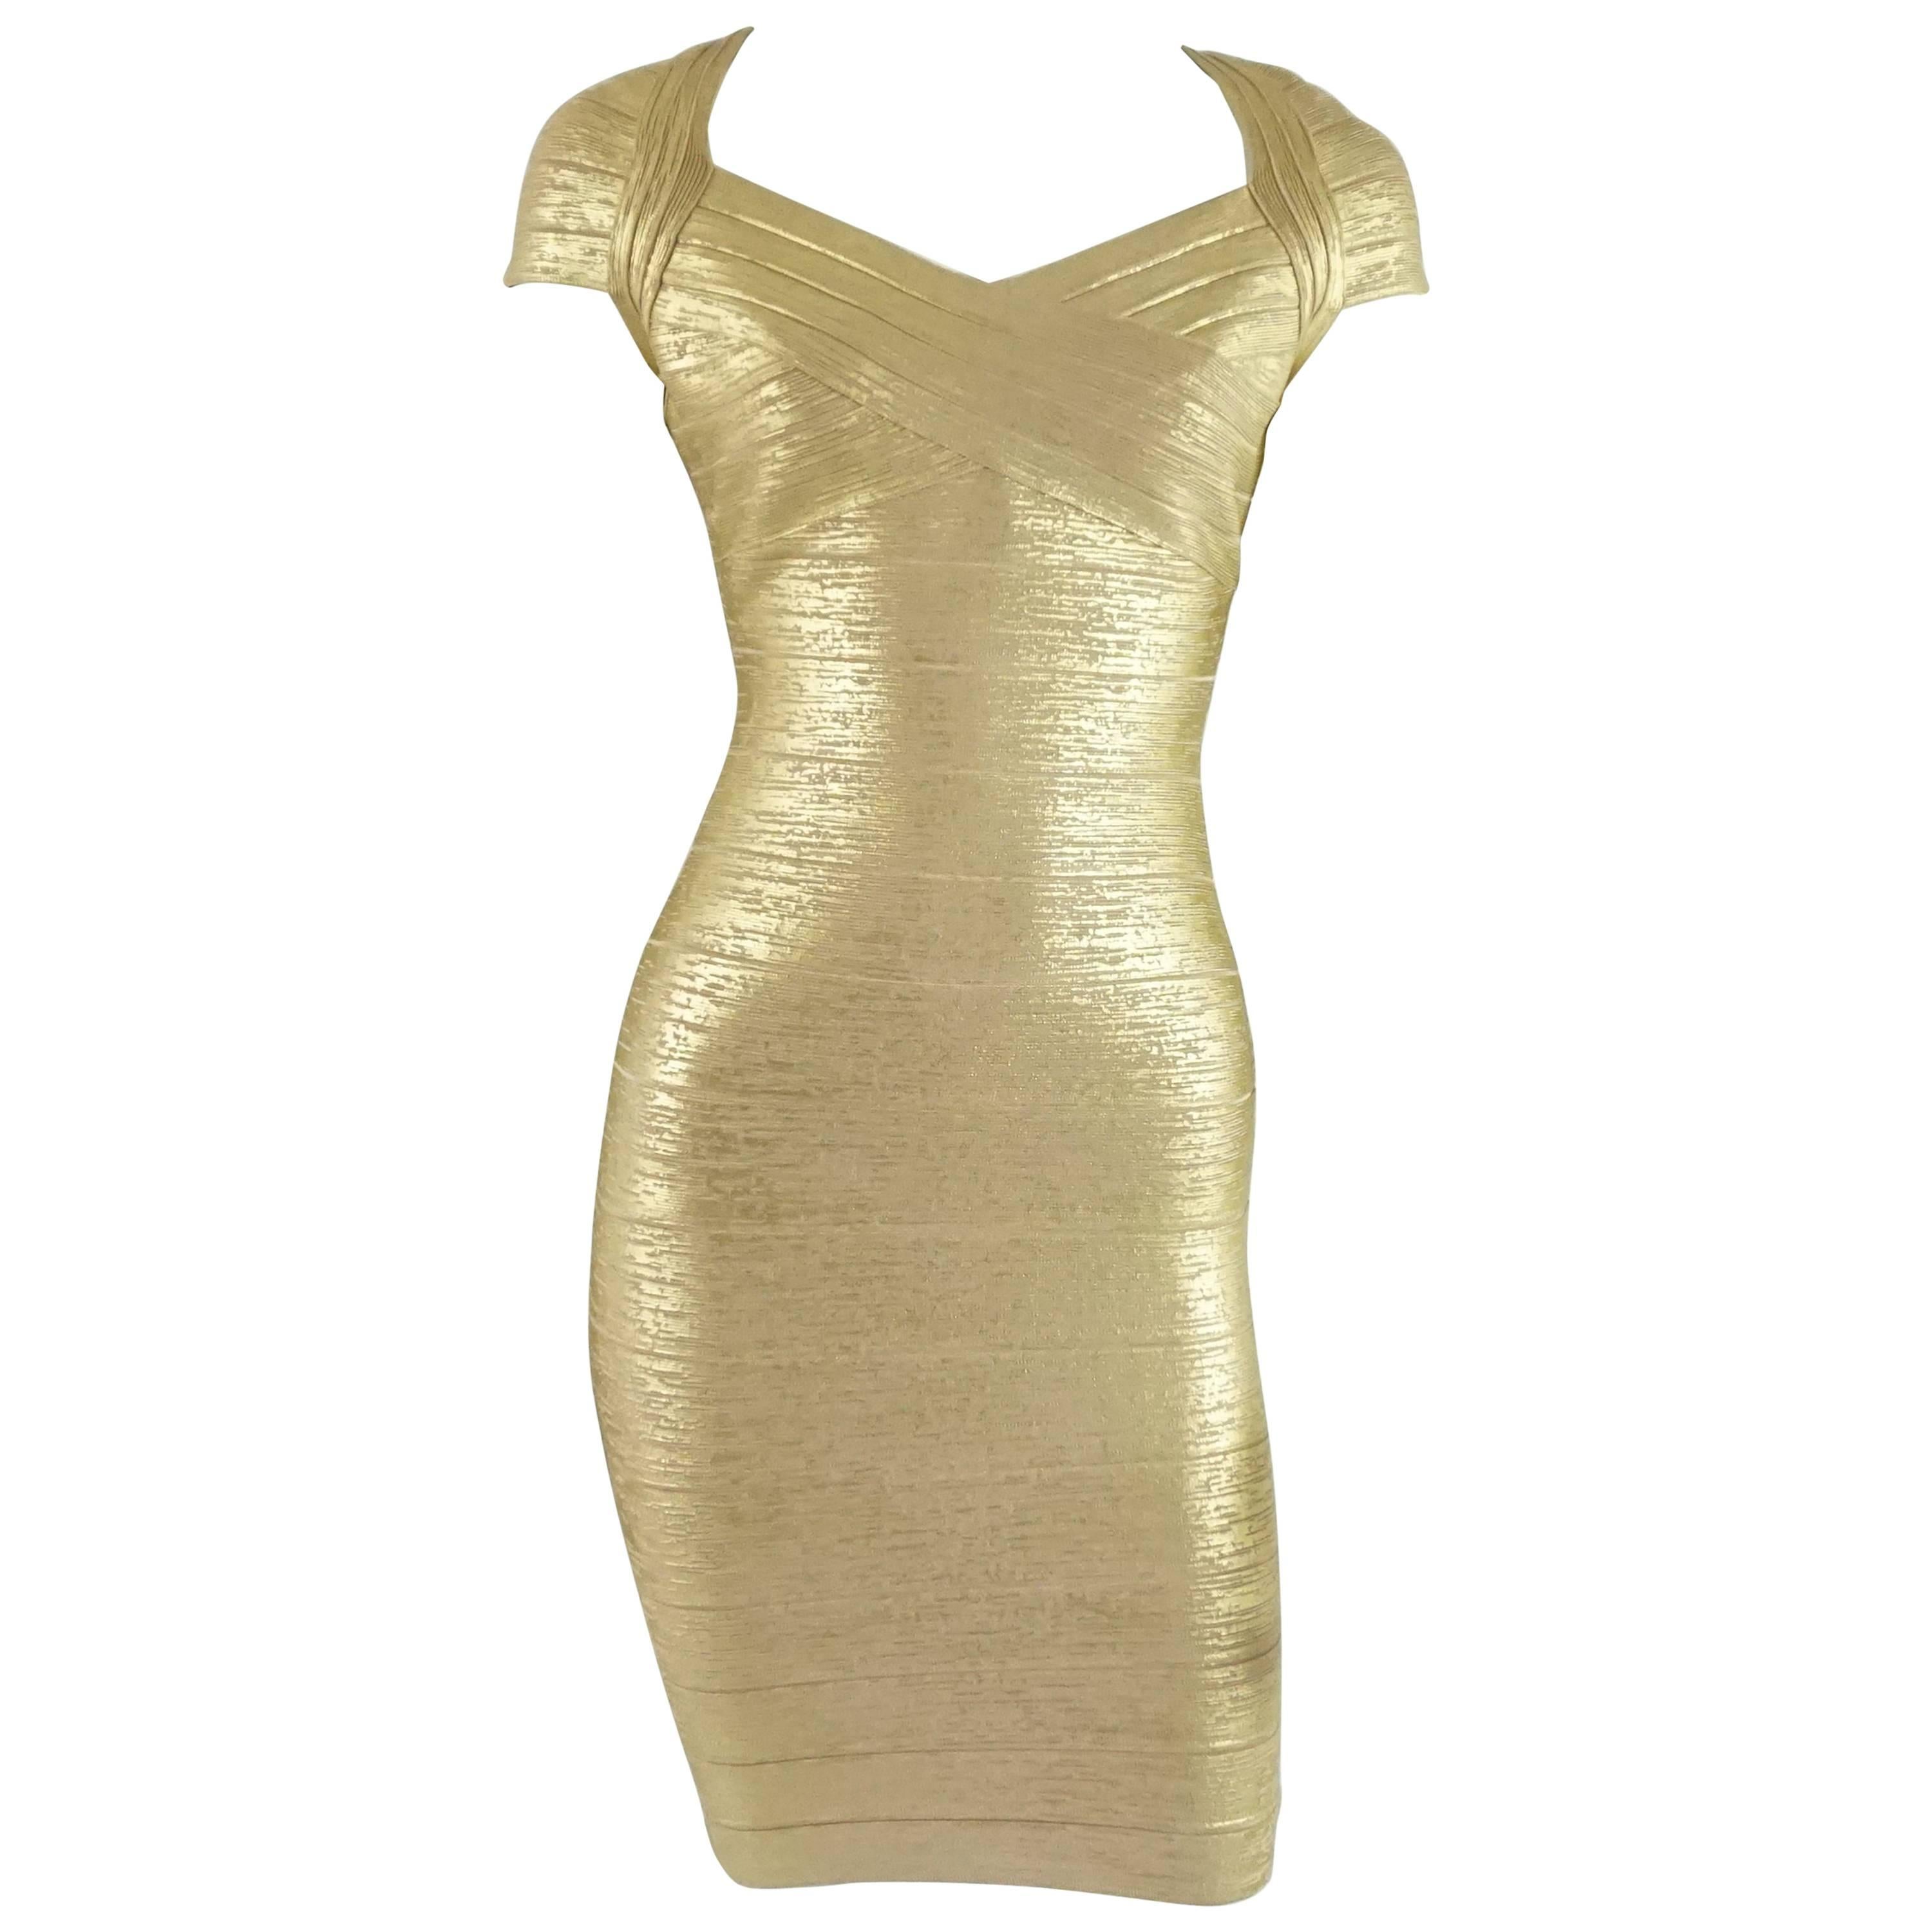 Herve Leger Metallic Gold Bandage Dress - S